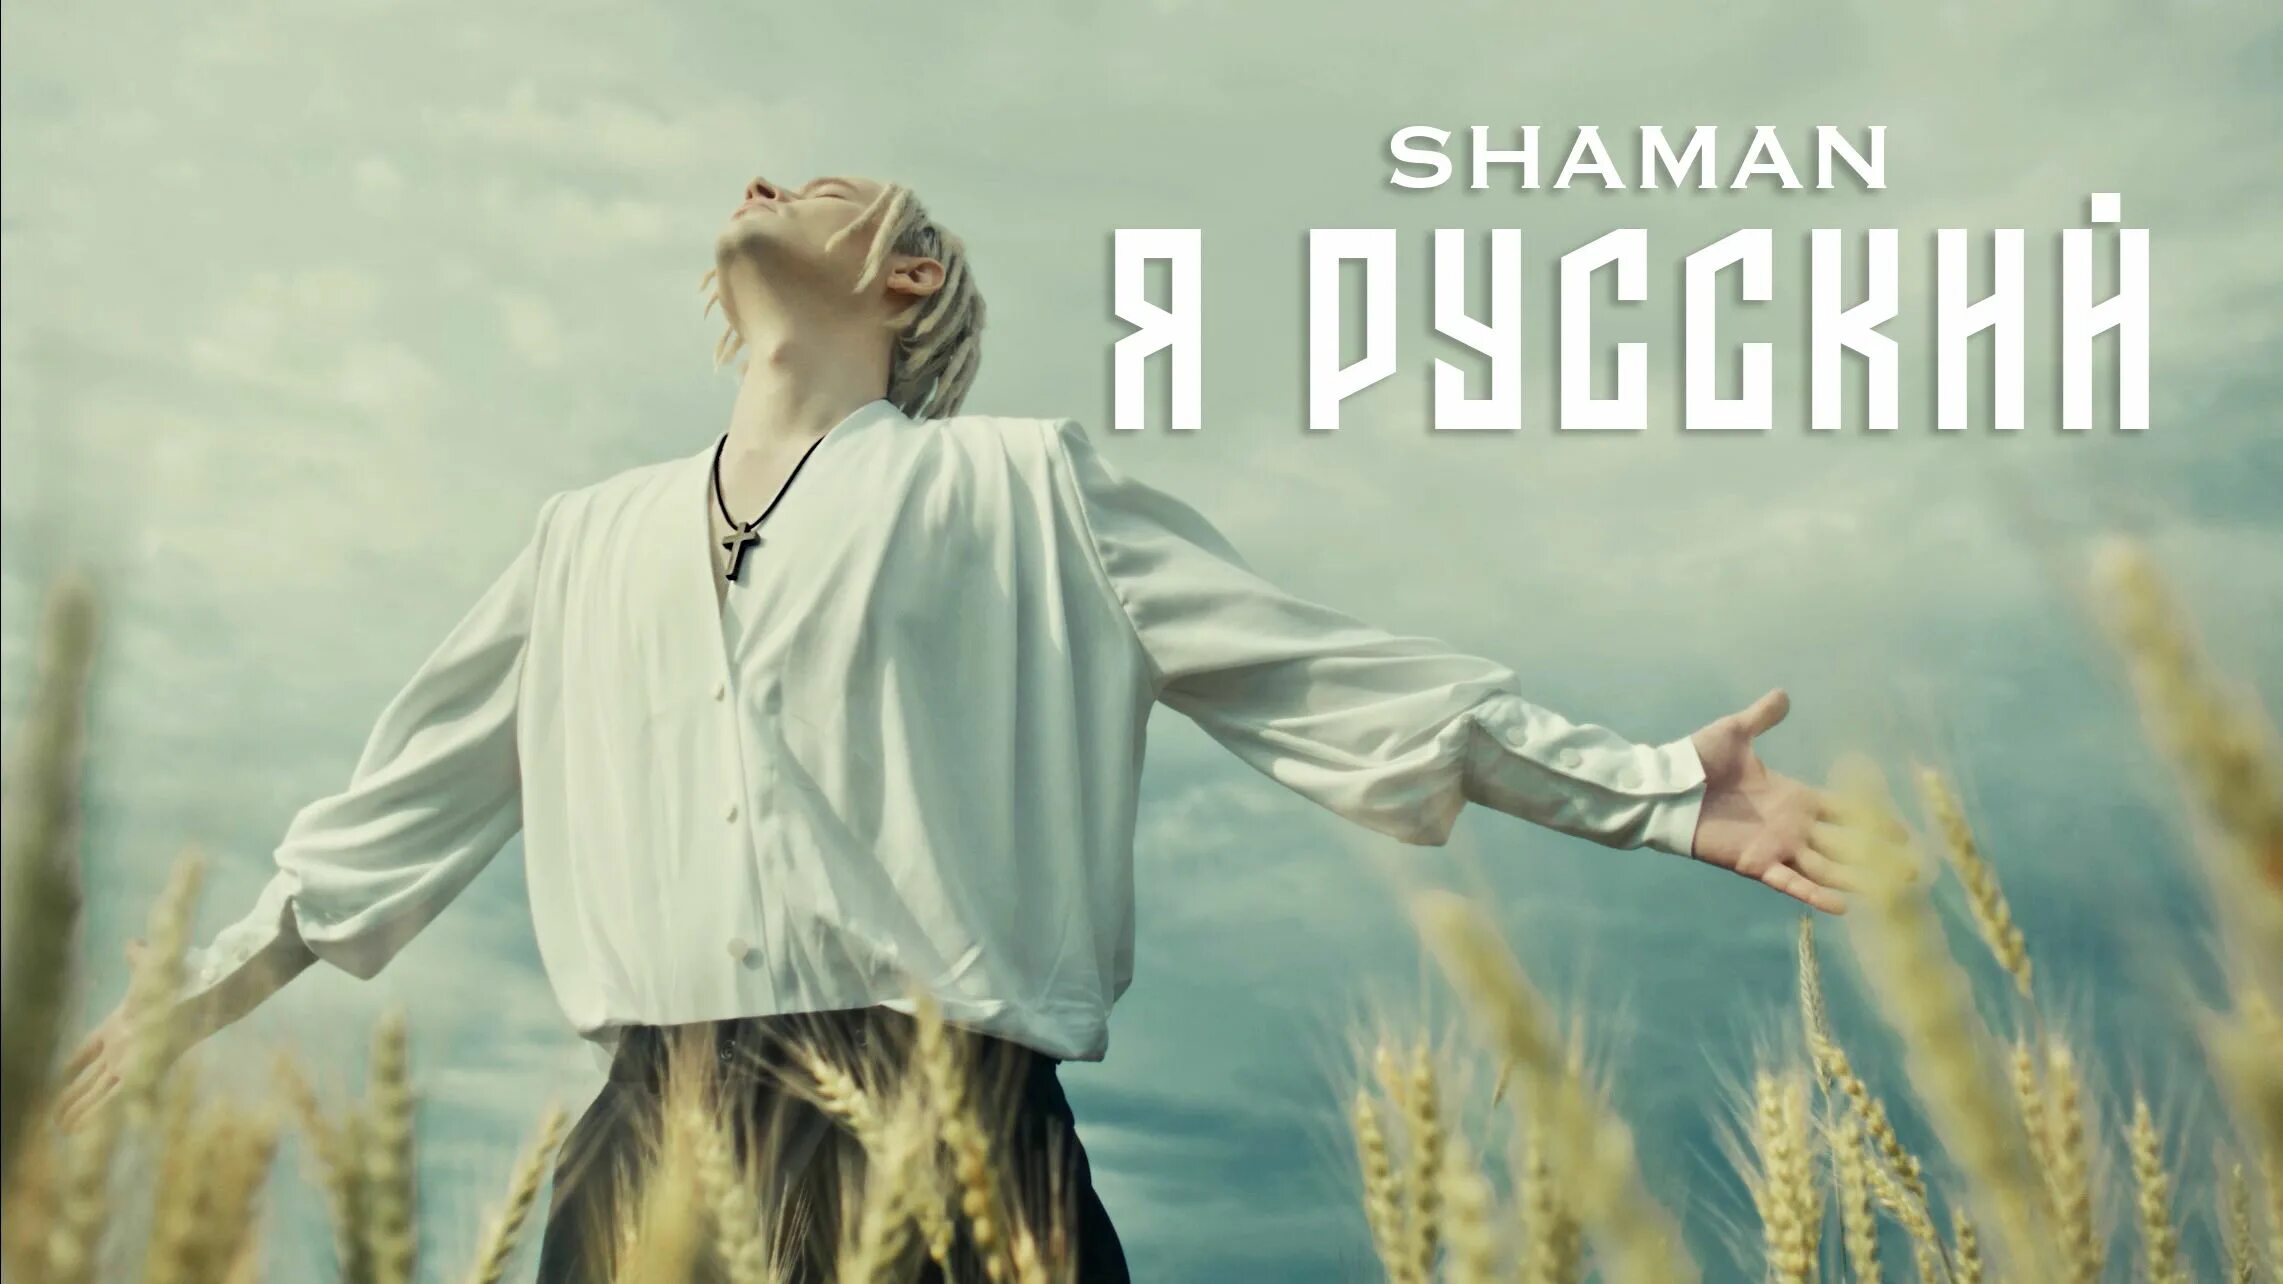 Shaman (певец). Shaman певец я русский.